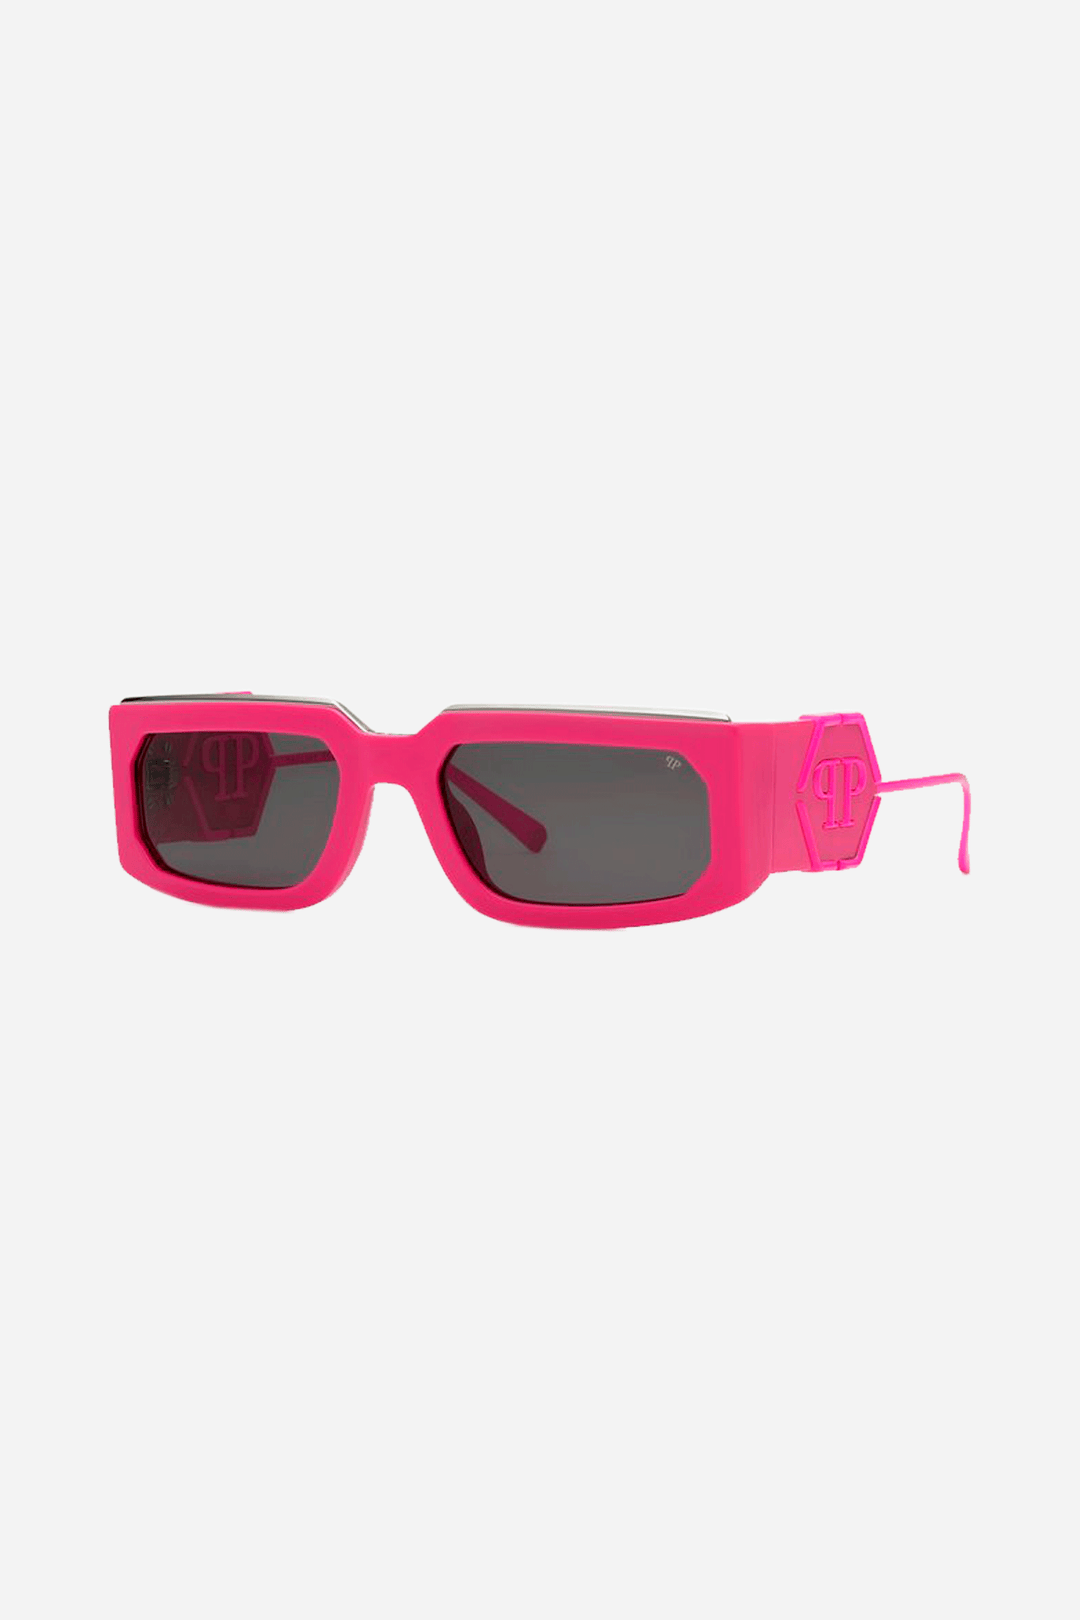 Philipp Plein rectangular pink sunglasses - Eyewear Club